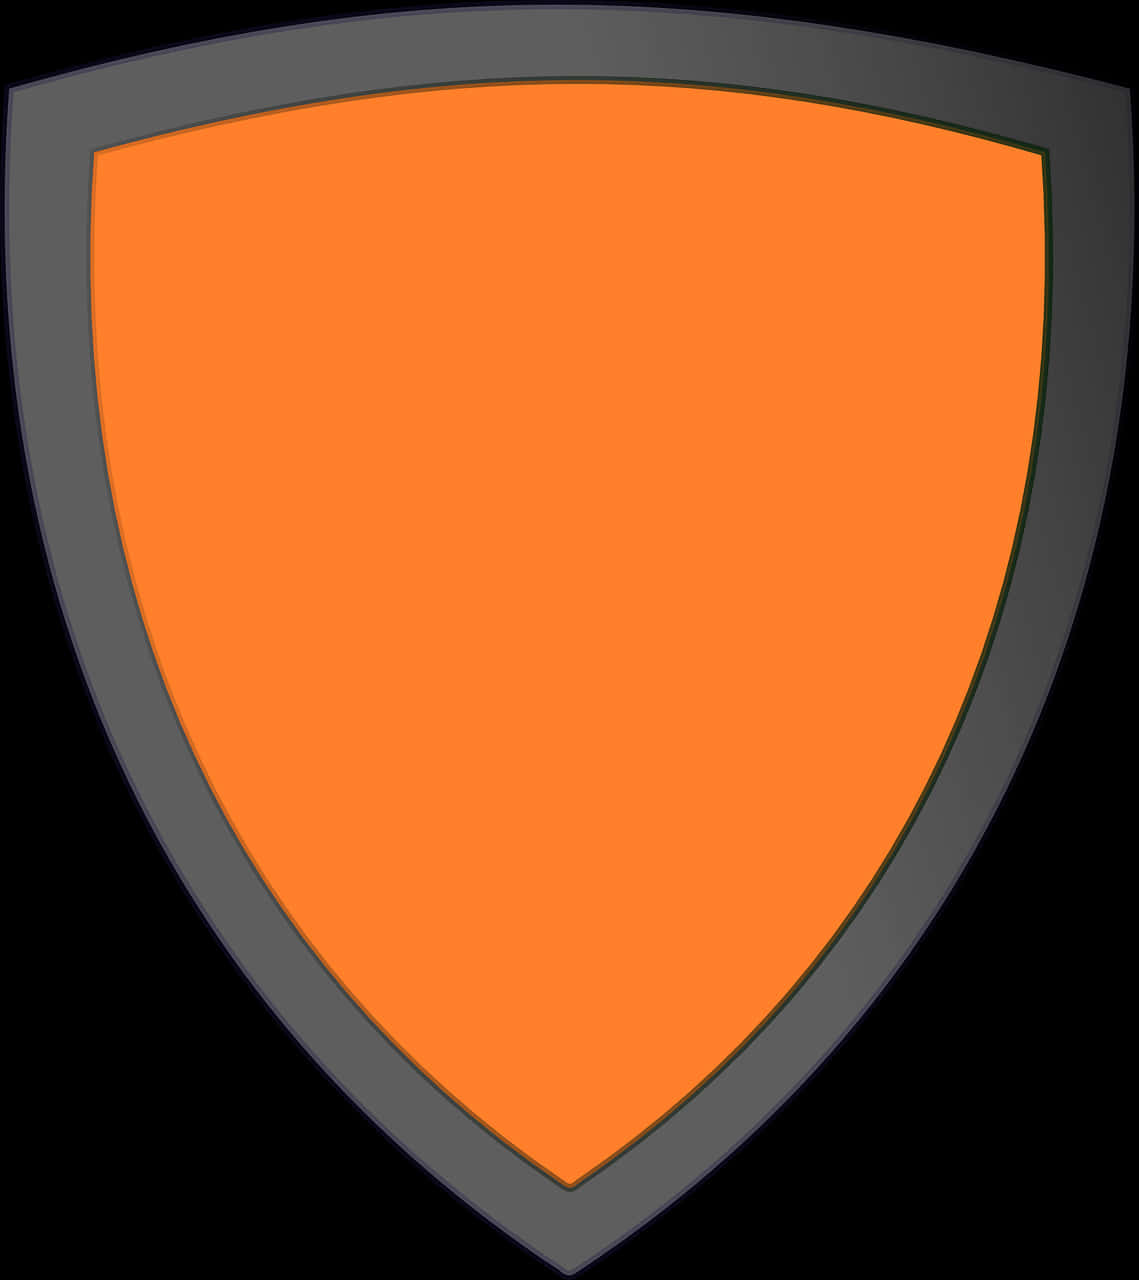 Orange Black Shield Graphic PNG image